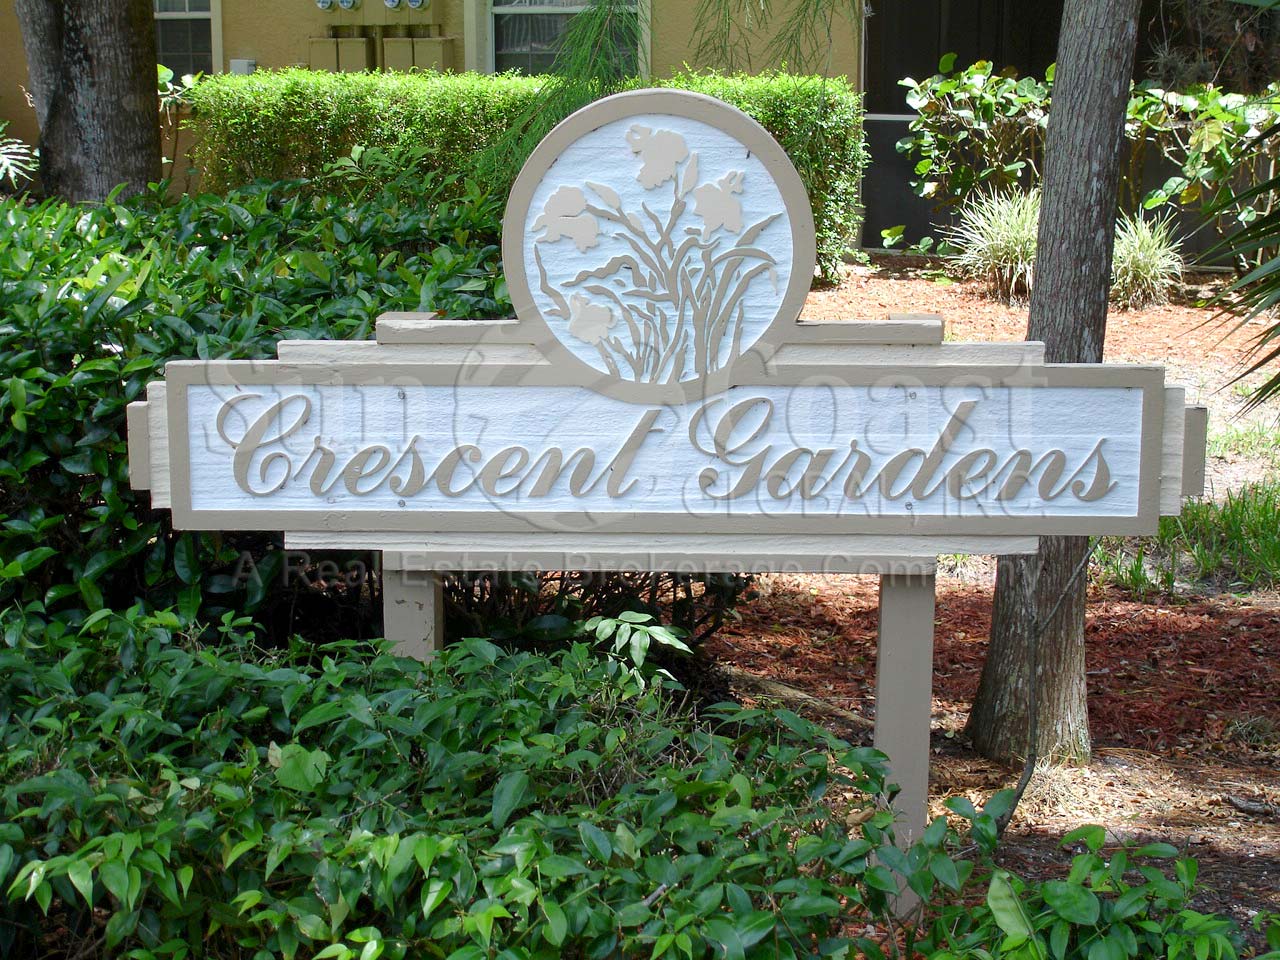 Crescent Gardens signage